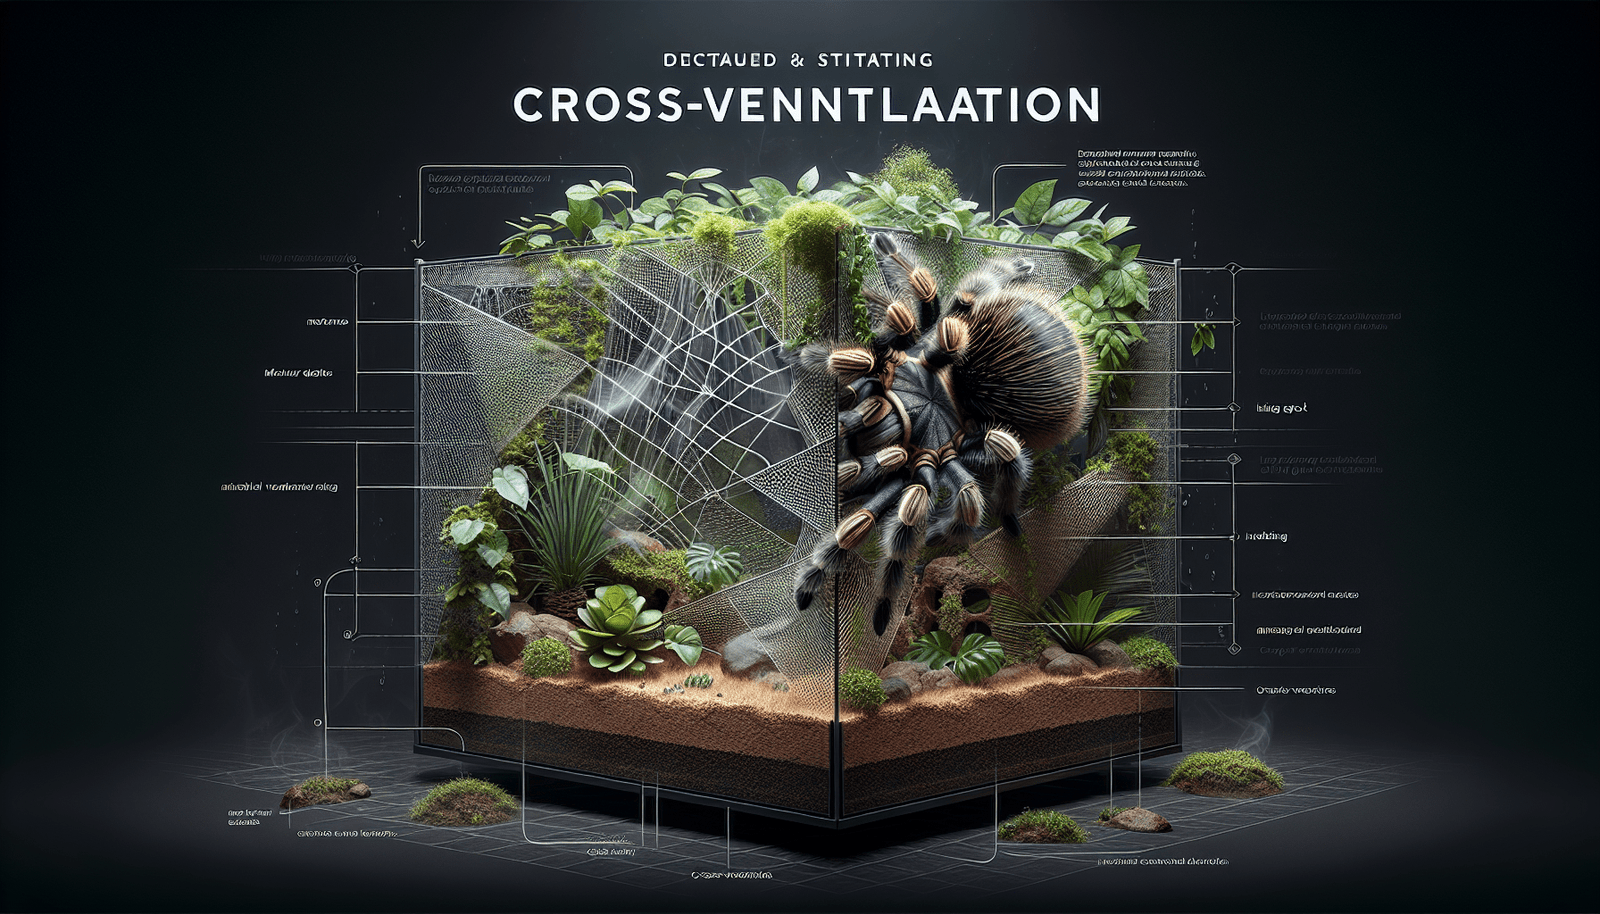 Can Tarantulas Be Kept In Enclosures With Cross-ventilation?